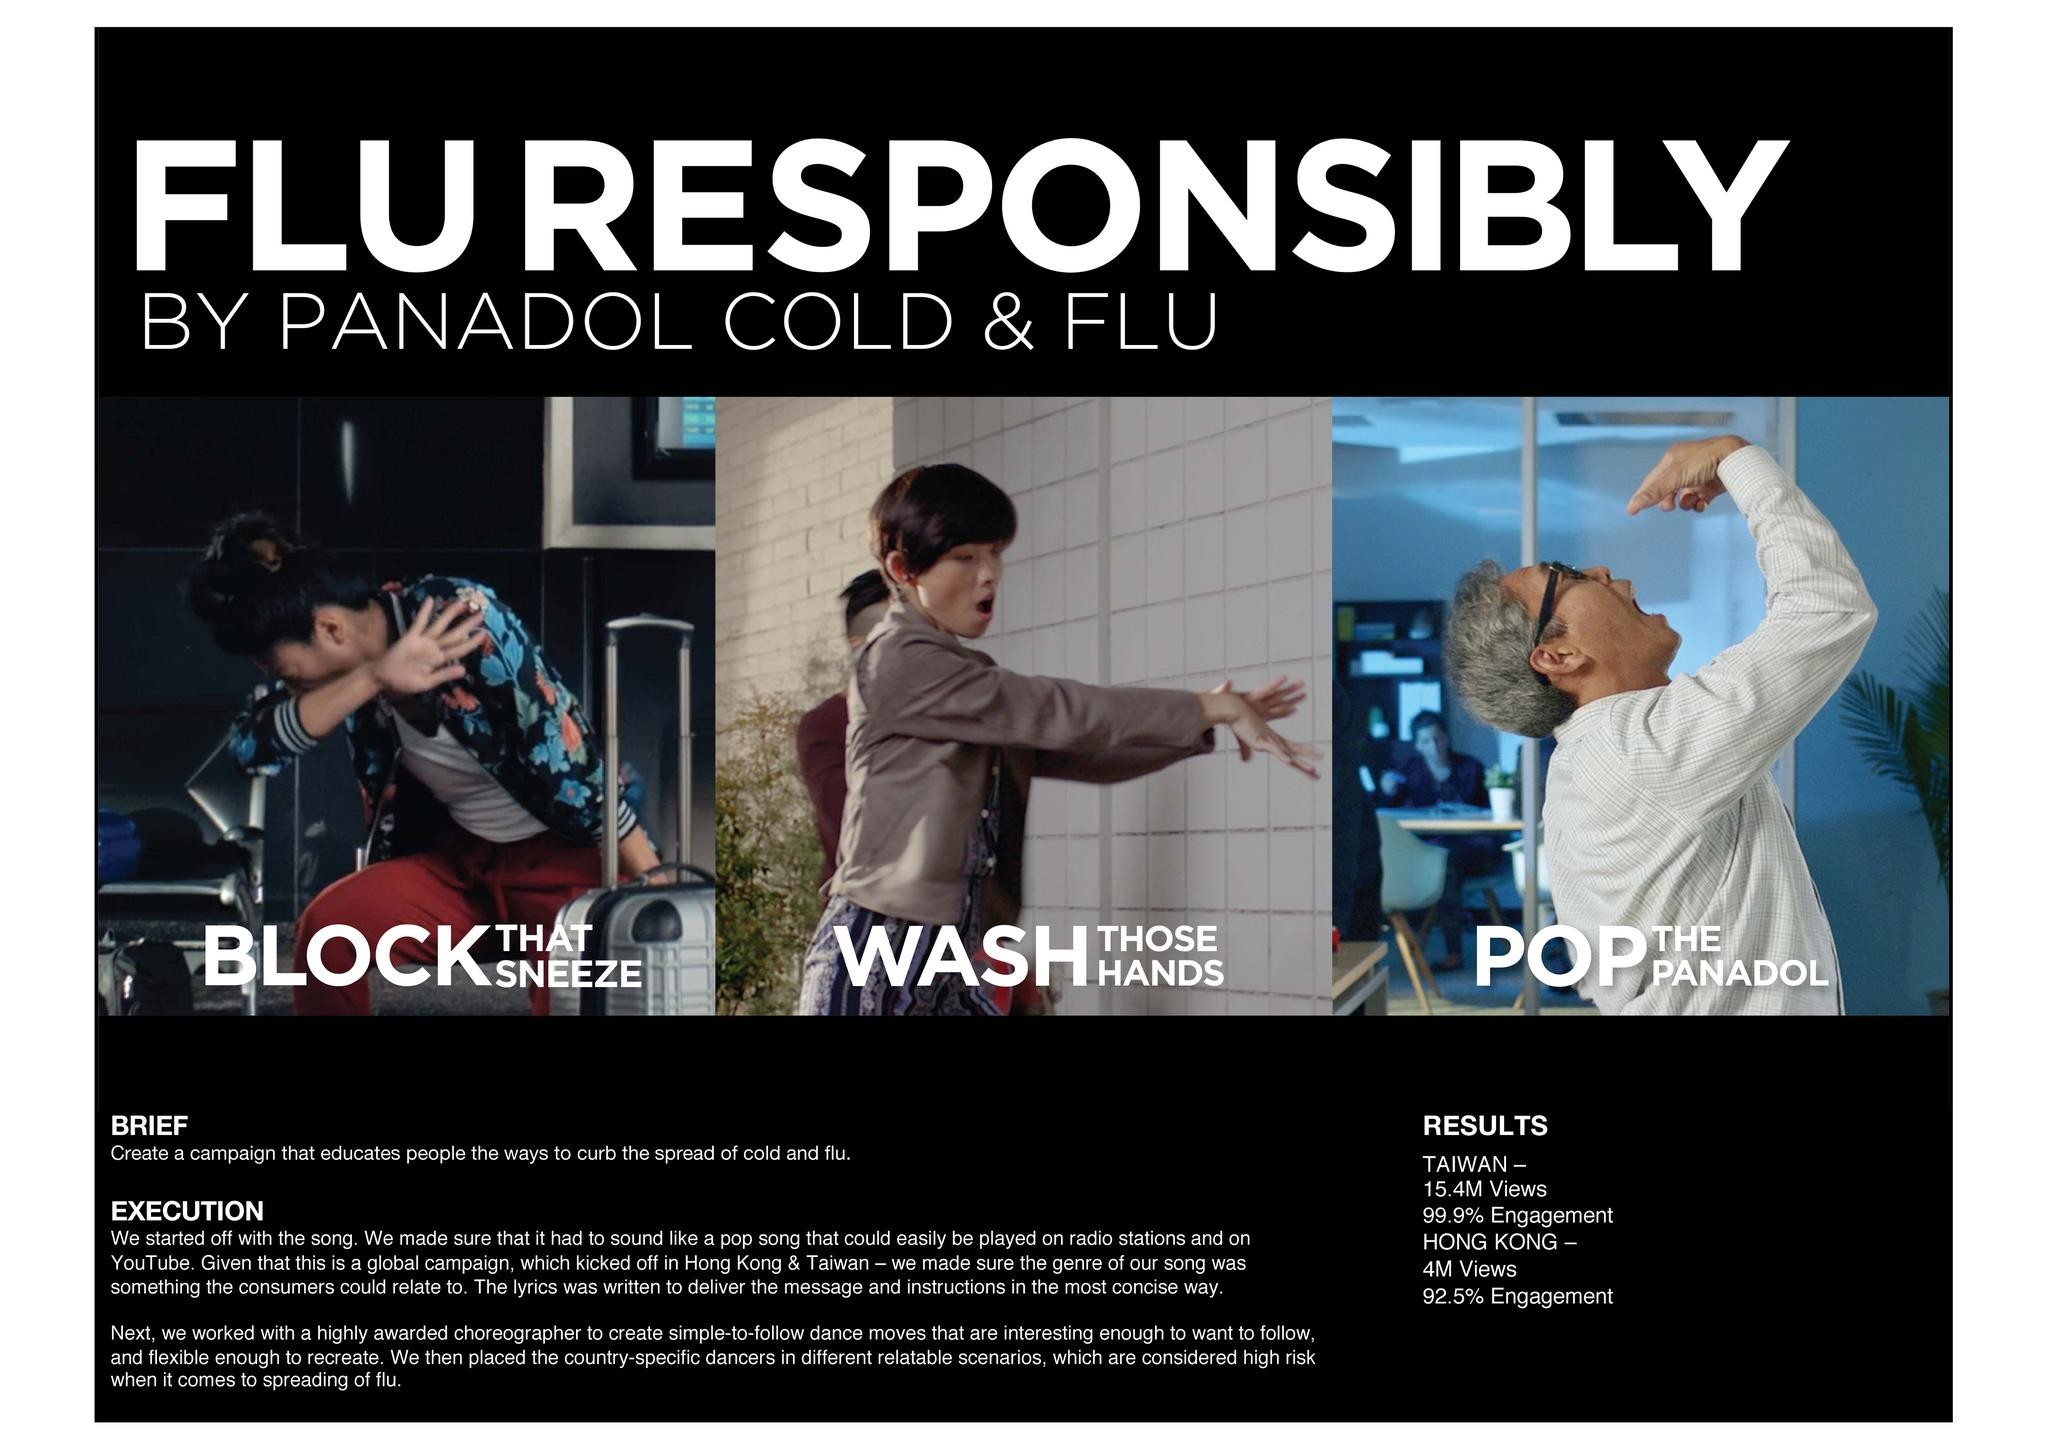 Flu Responsibly: Block, Wash, Pop